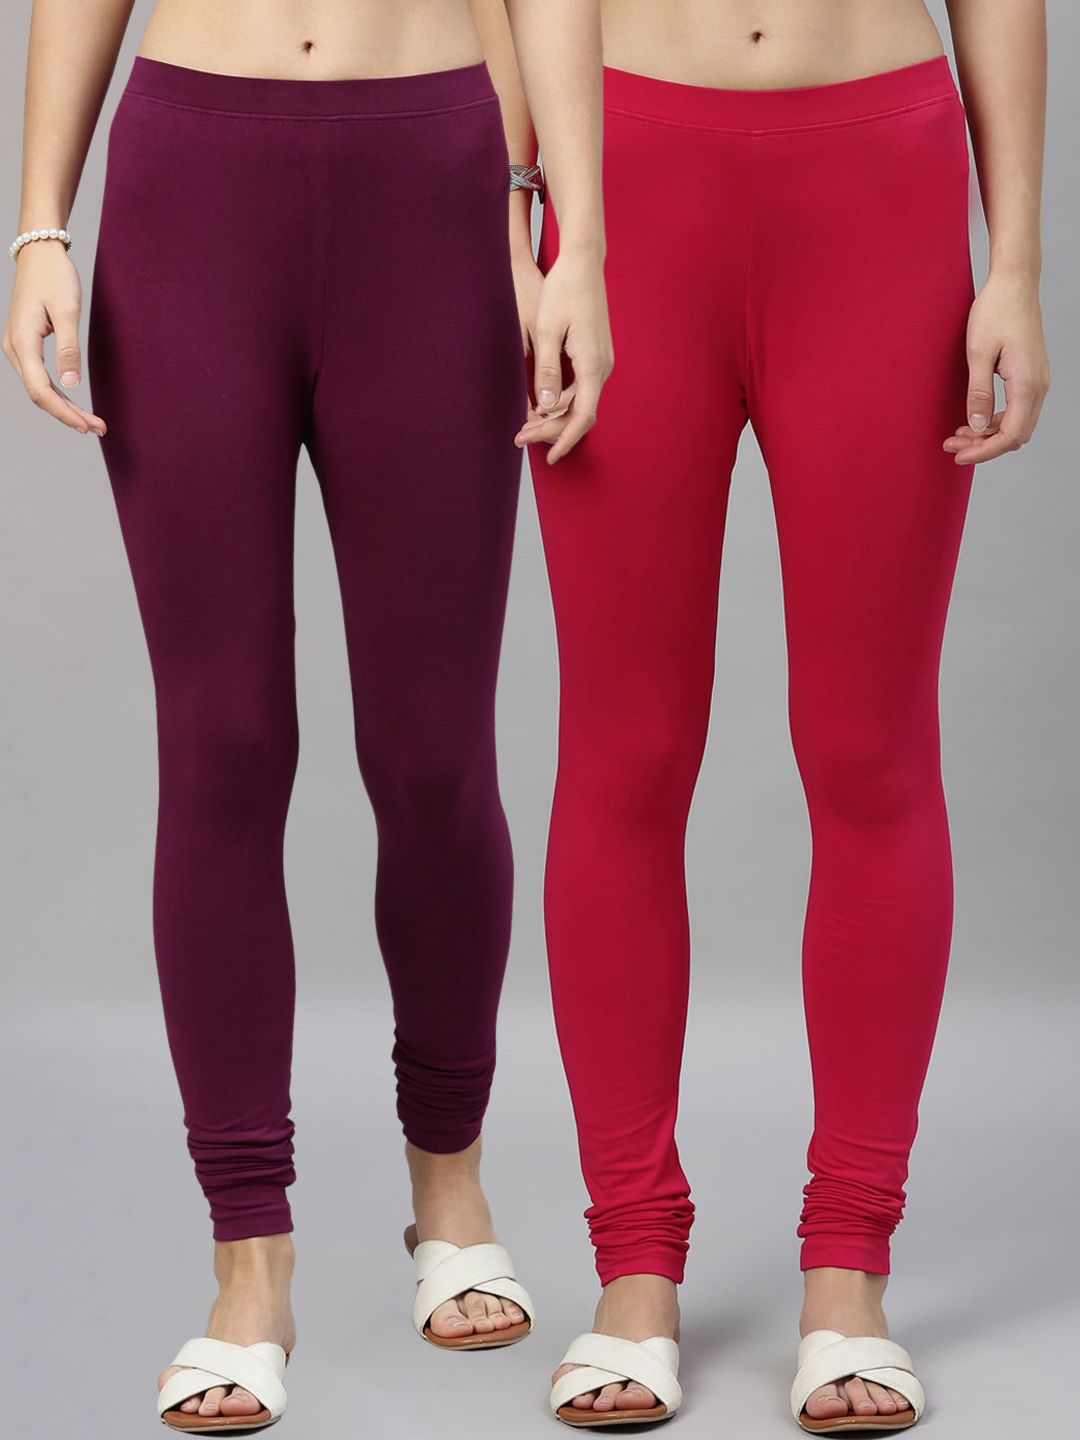 Kryptic Women Pack Of 2 Pink & Burgundy Solid Churidar-Length Leggings Price in India